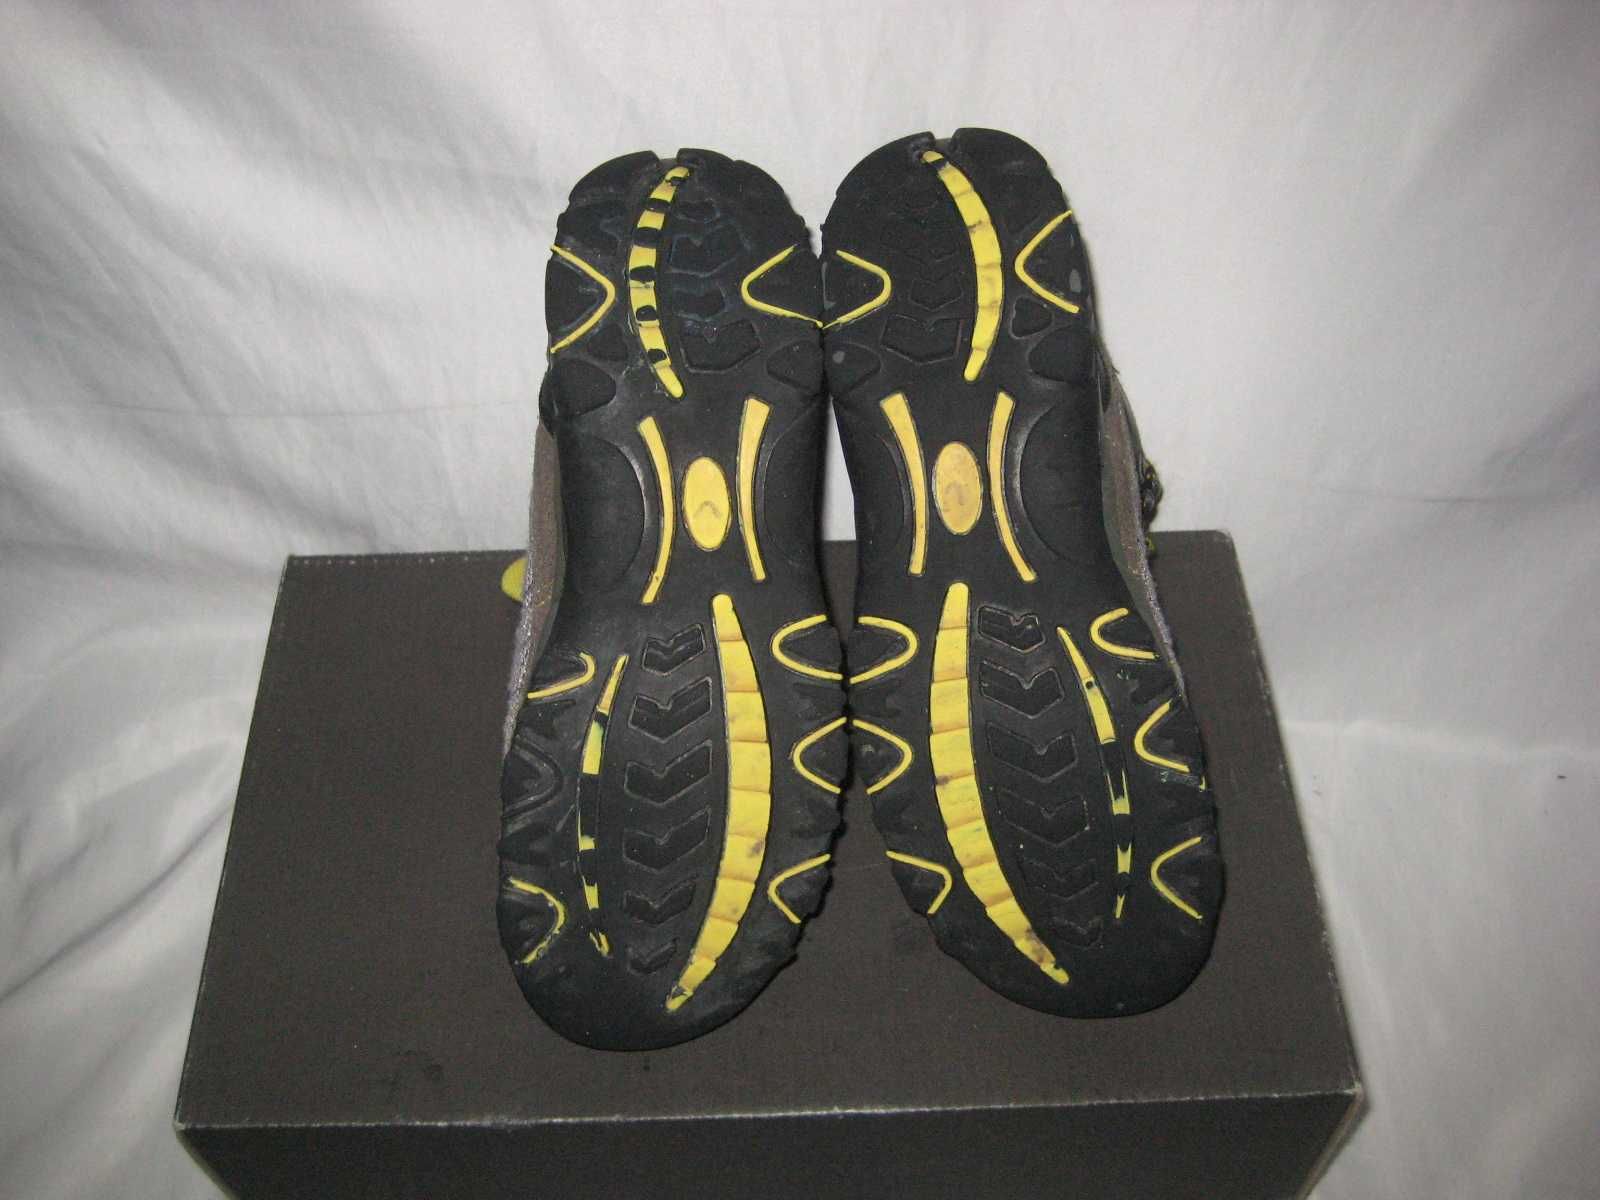 Ботинки термо Everest Gore-Tex Германия 37 размер, стелька 24 см.Кожа